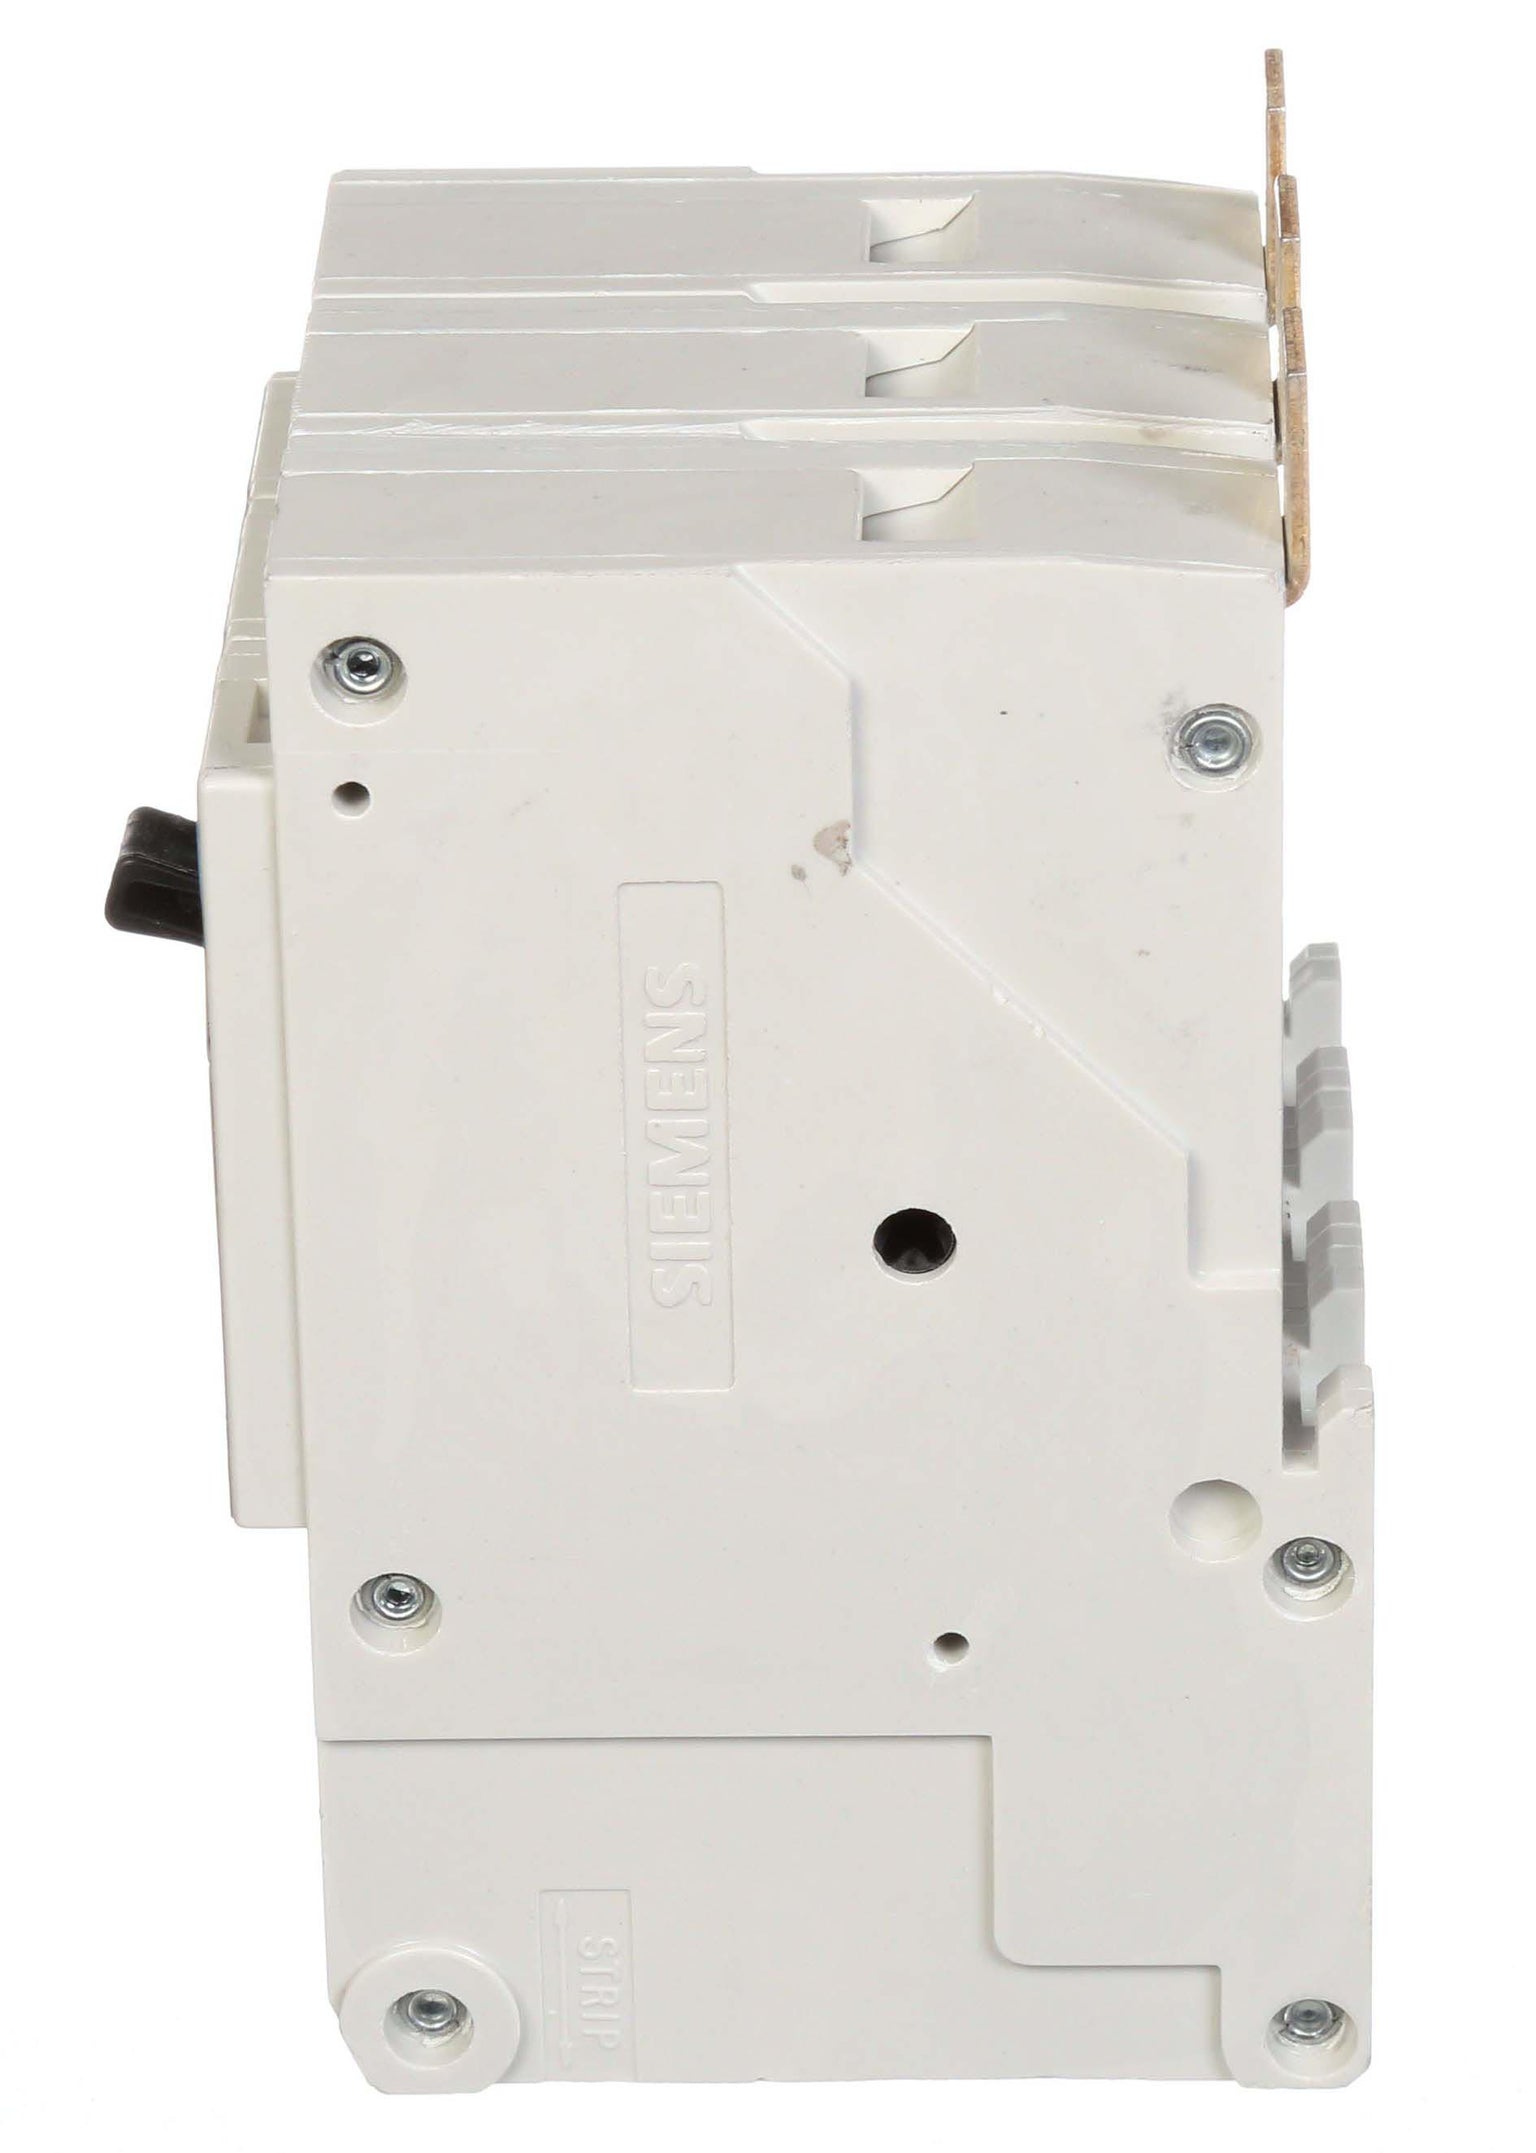 NGB3B050B - Siemens - Molded Case Circuit Breaker